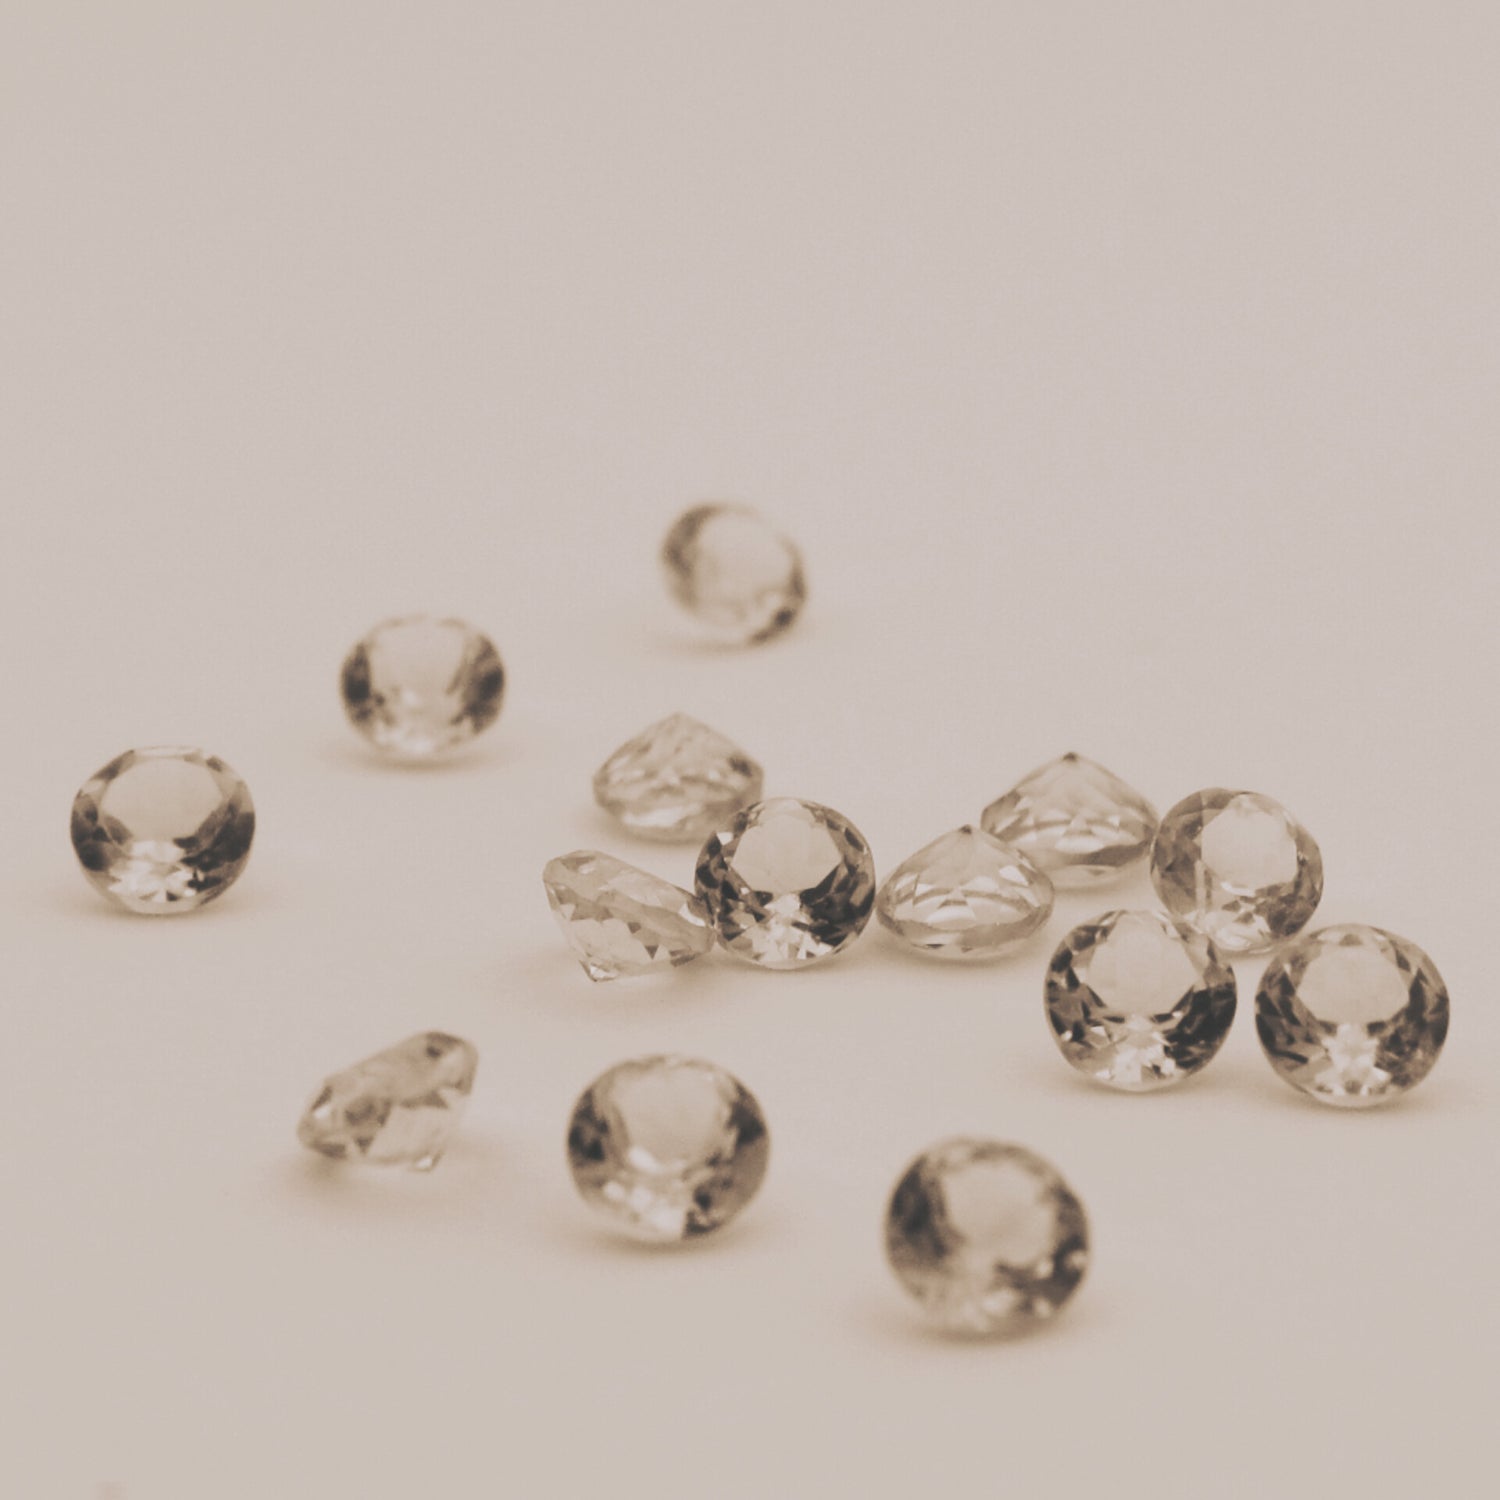 14 small gemstones in round cut. Casez Jewellery.